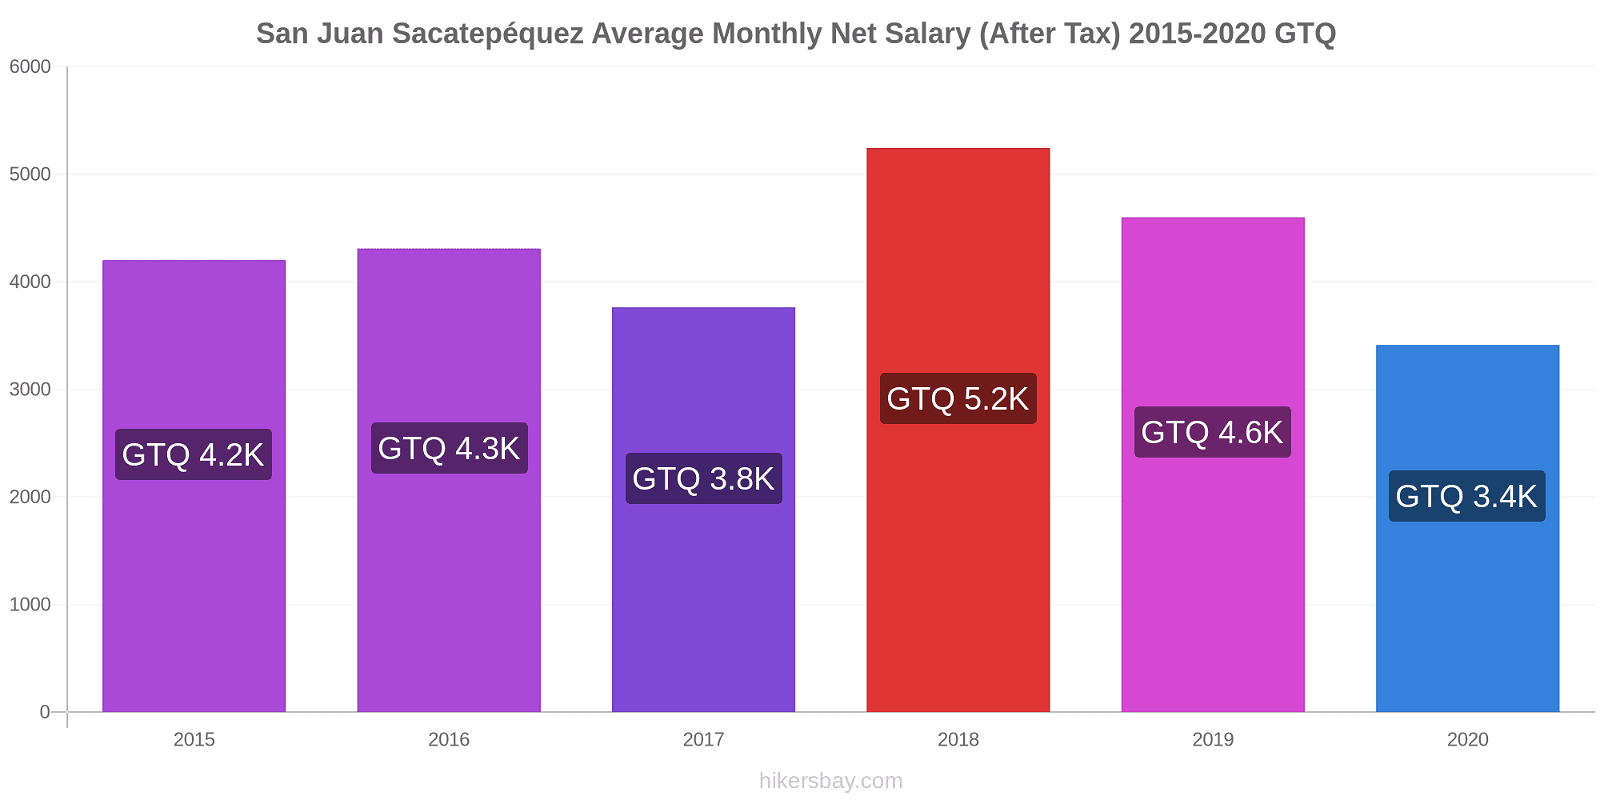 San Juan Sacatepéquez price changes Average Monthly Net Salary (After Tax) hikersbay.com